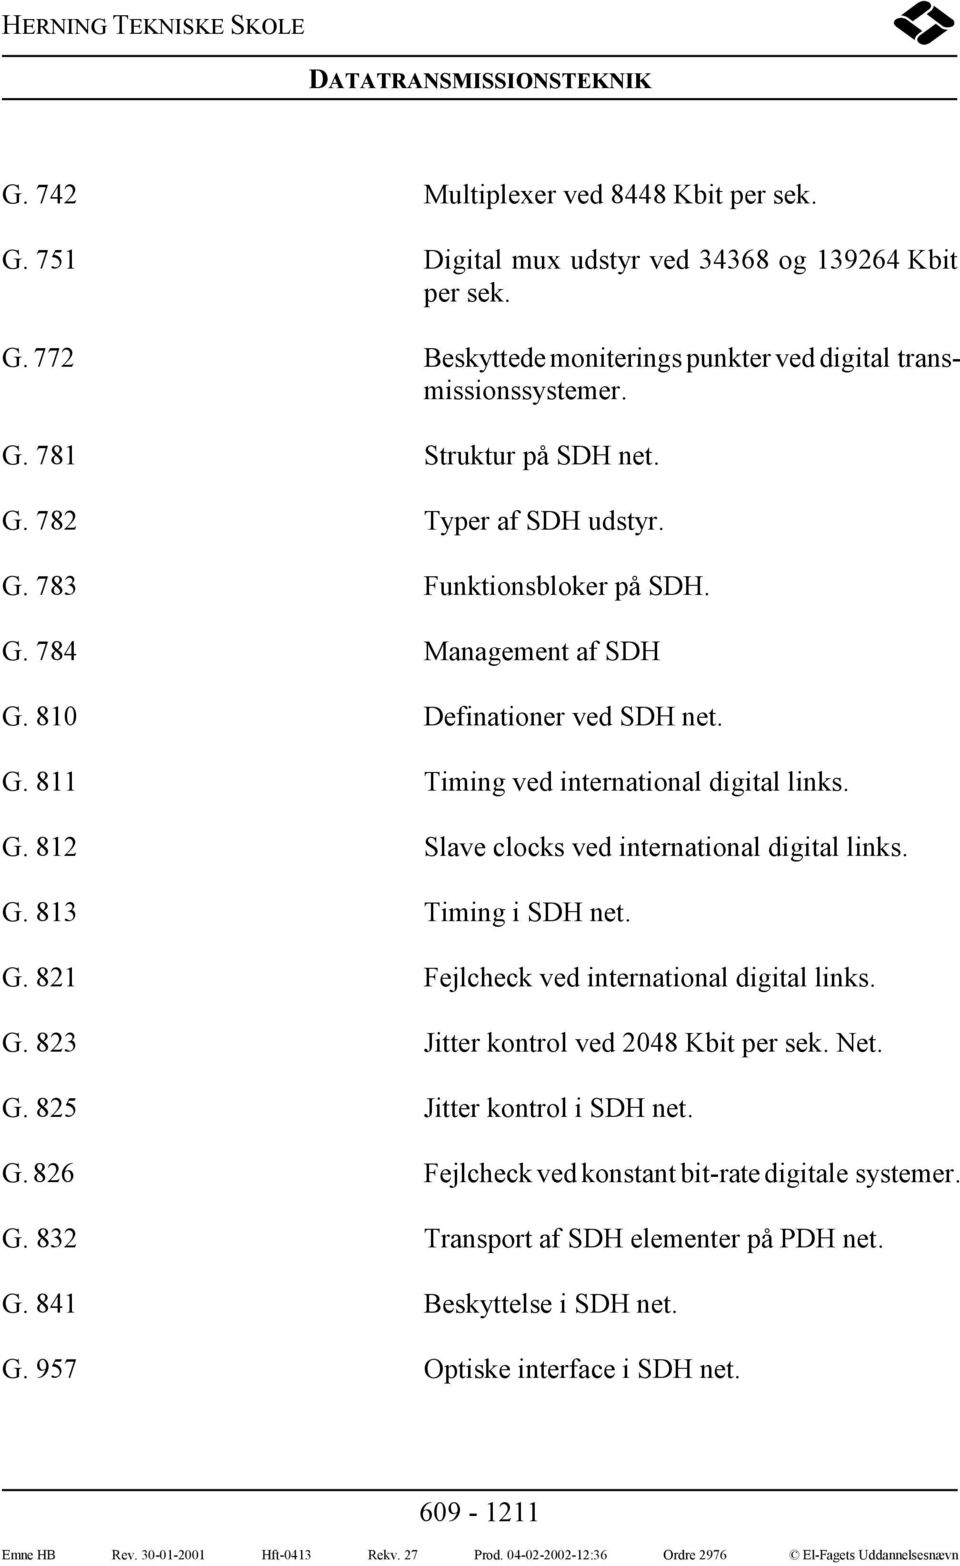 G. 813 Timing i SDH net. G. 821 Fejlcheck ved international digital links. G. 823 Jitter kontrol ved 2048 Kbit per sek. Net. G. 825 Jitter kontrol i SDH net. G. 826 Fejlcheck ved konstant bit-rate digitale systemer.